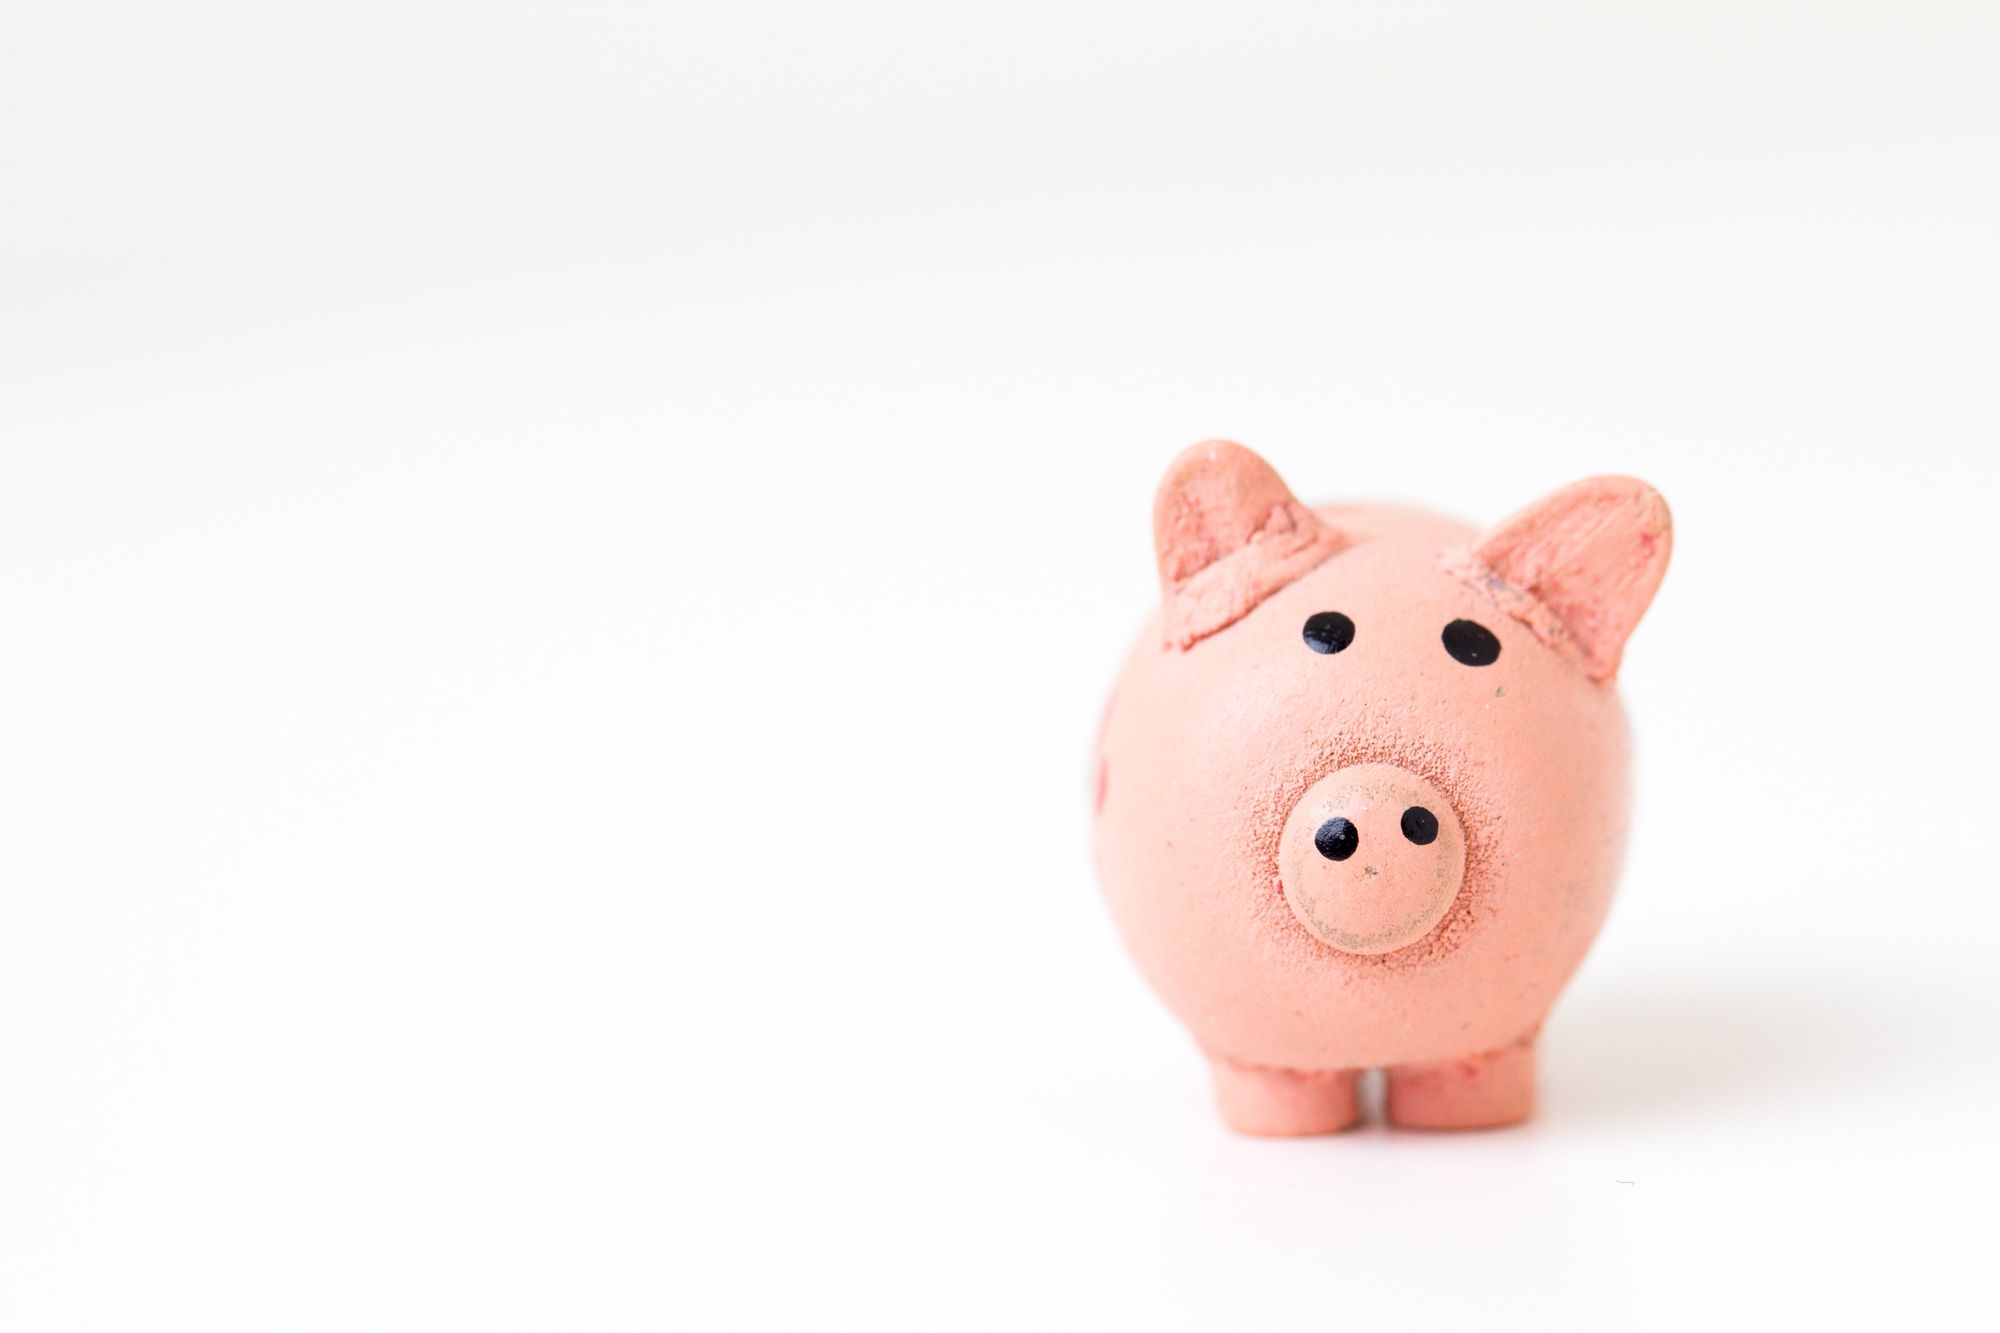 Small piggy bank symbolising saving and budgeting